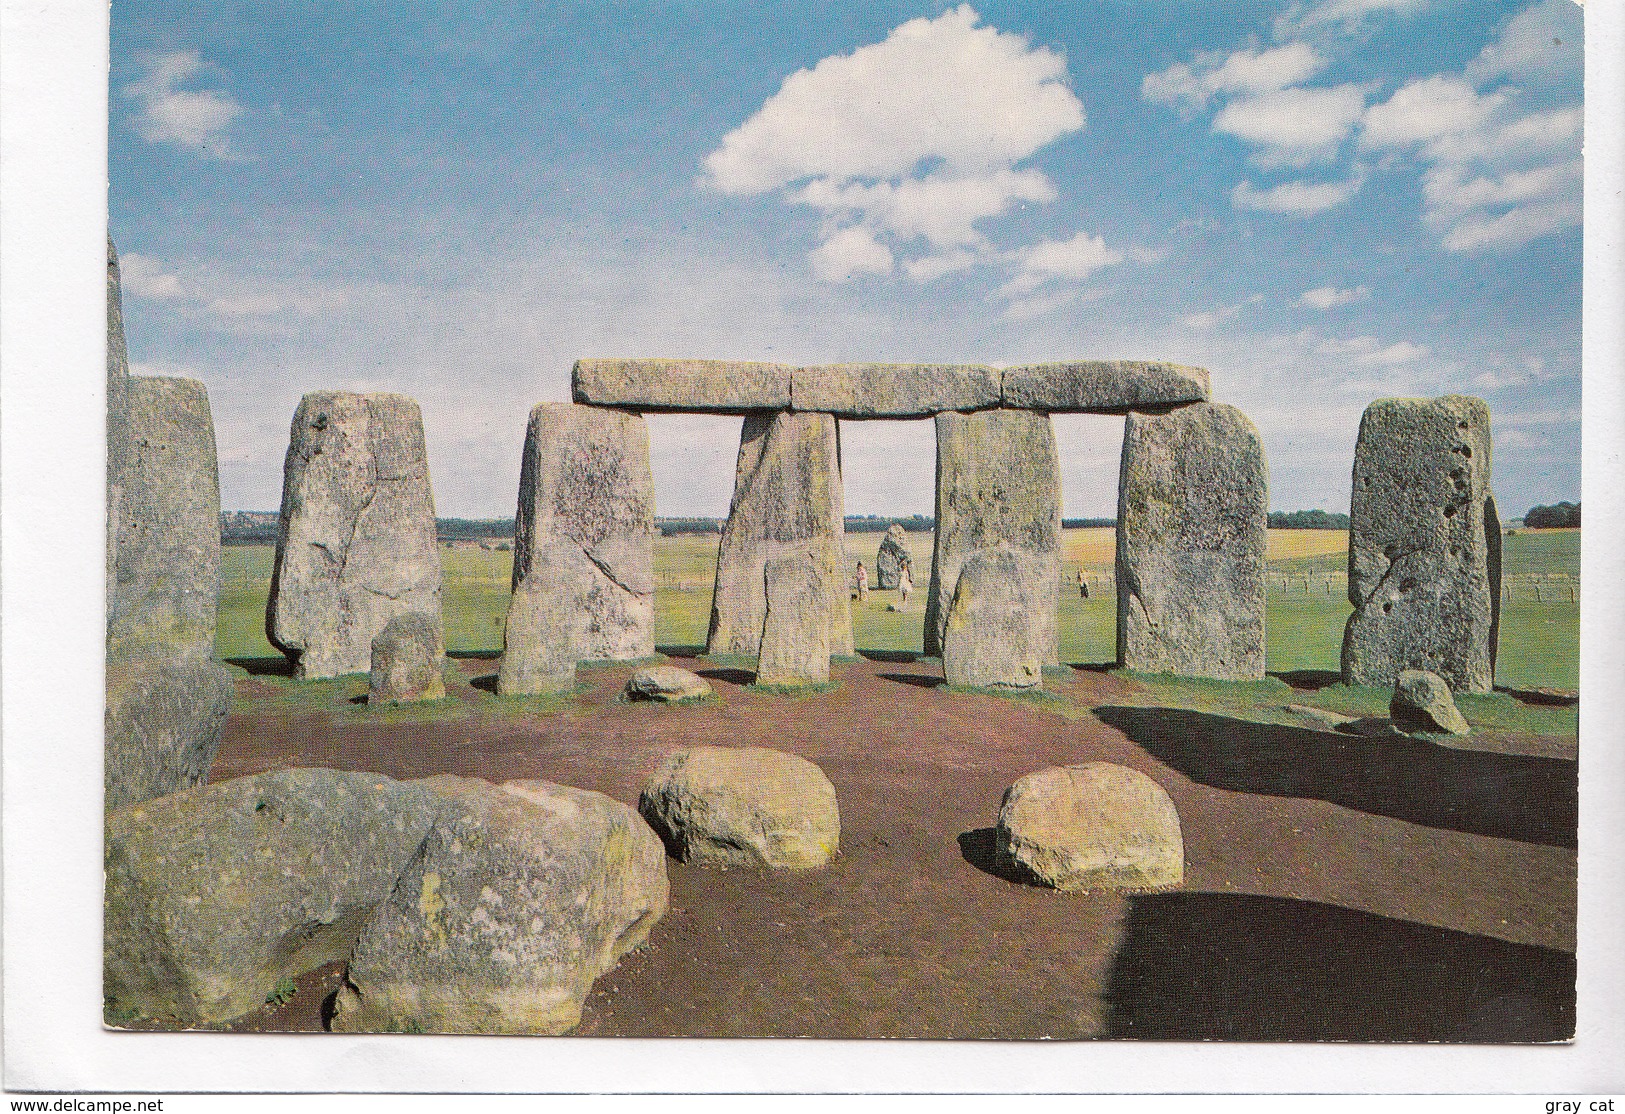 Stonehenge, Wiltshire, View Looking East, Unused Postcard [22700] - Stonehenge